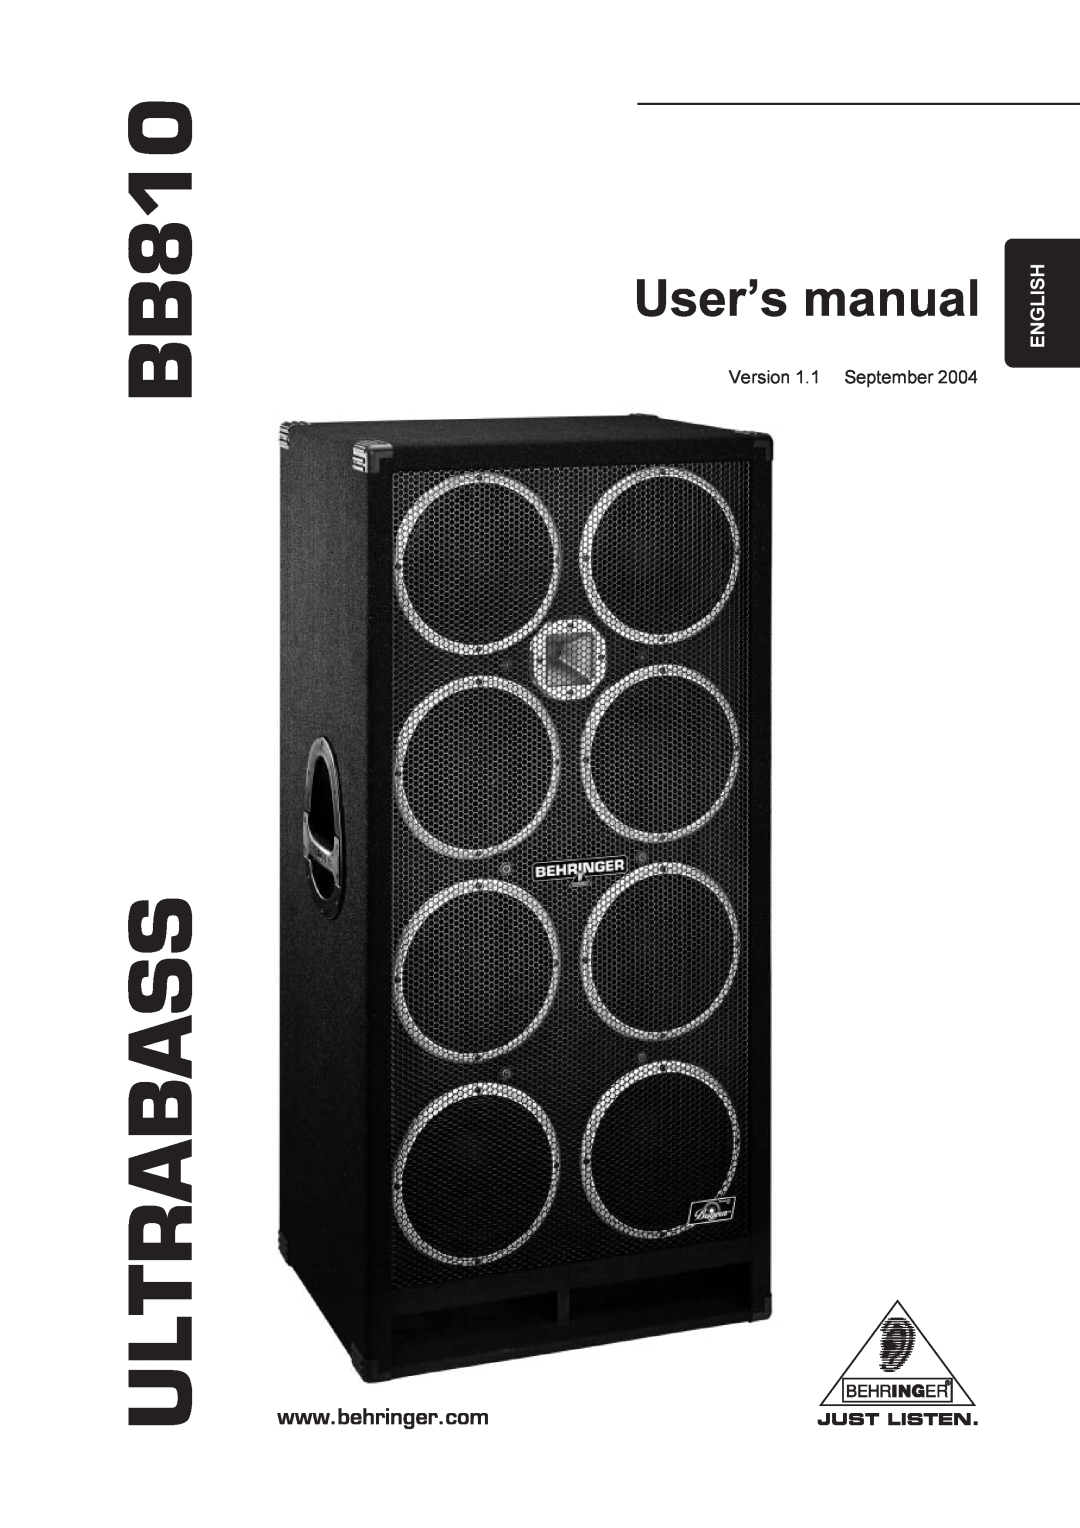 Behringer manual BB810 ULTRABASS, English 